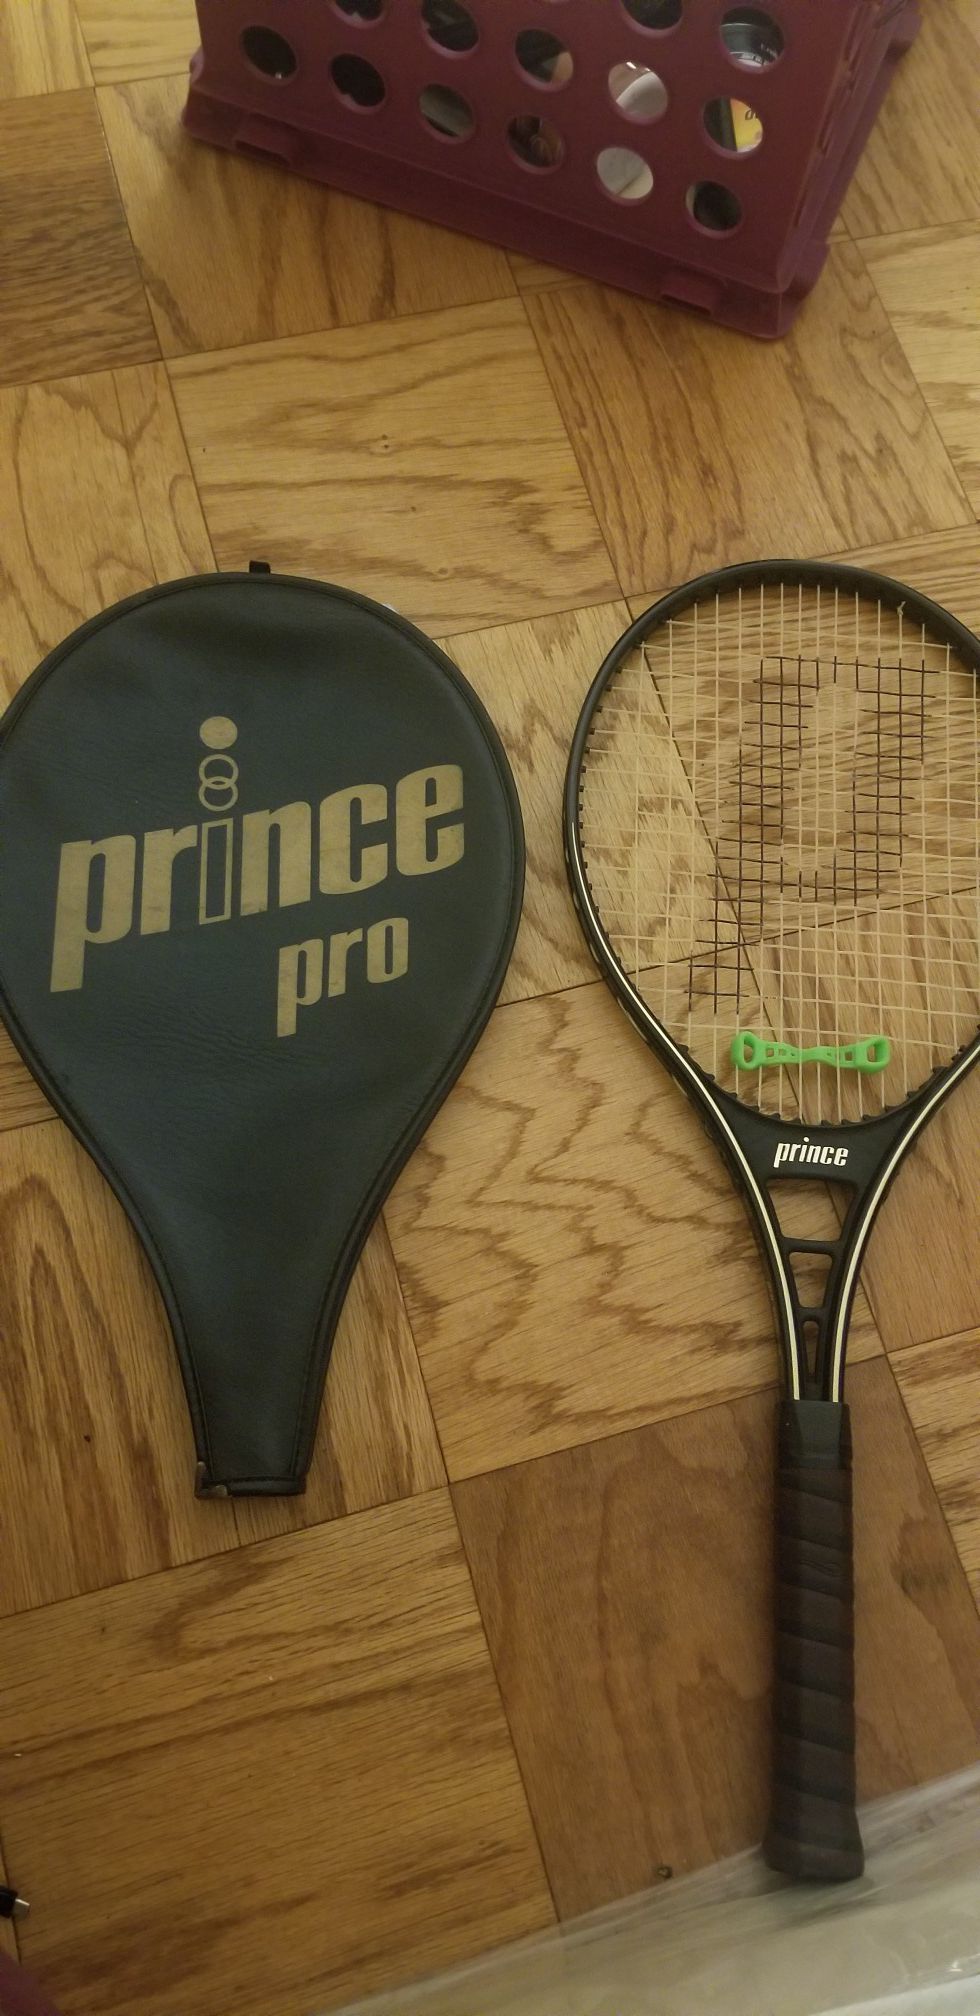 Prince pro tennis racket